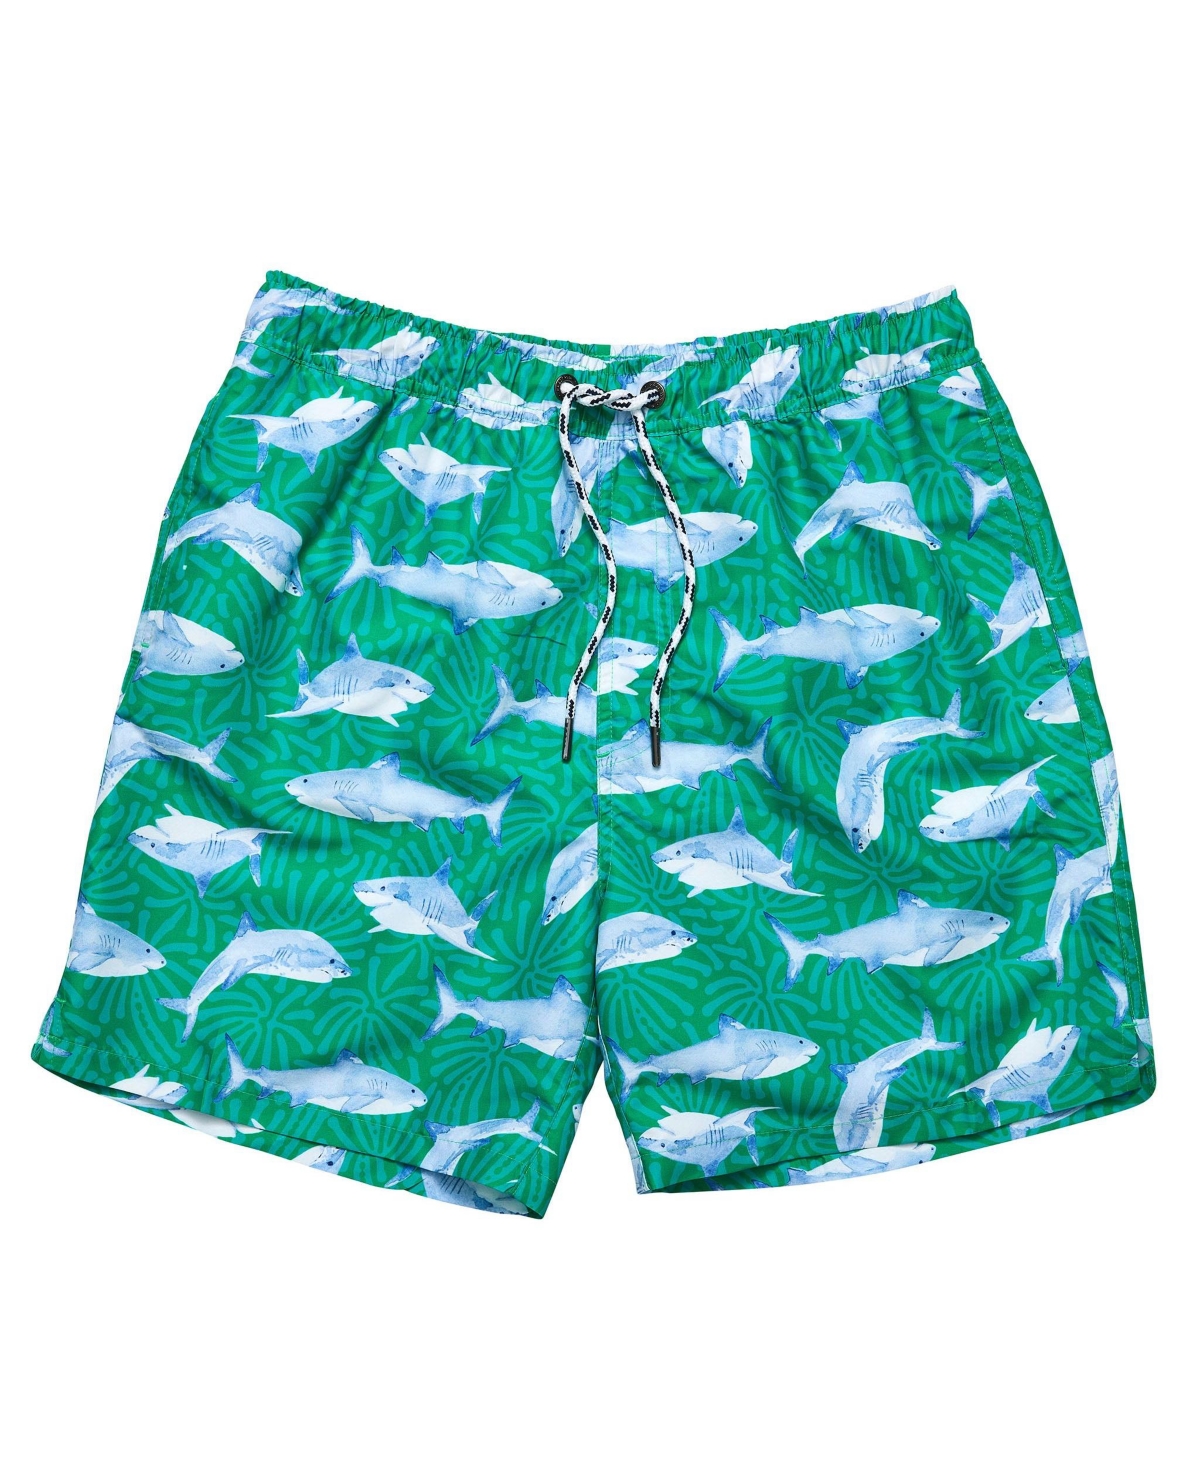 Men's Reef Shark Swim Short - Green